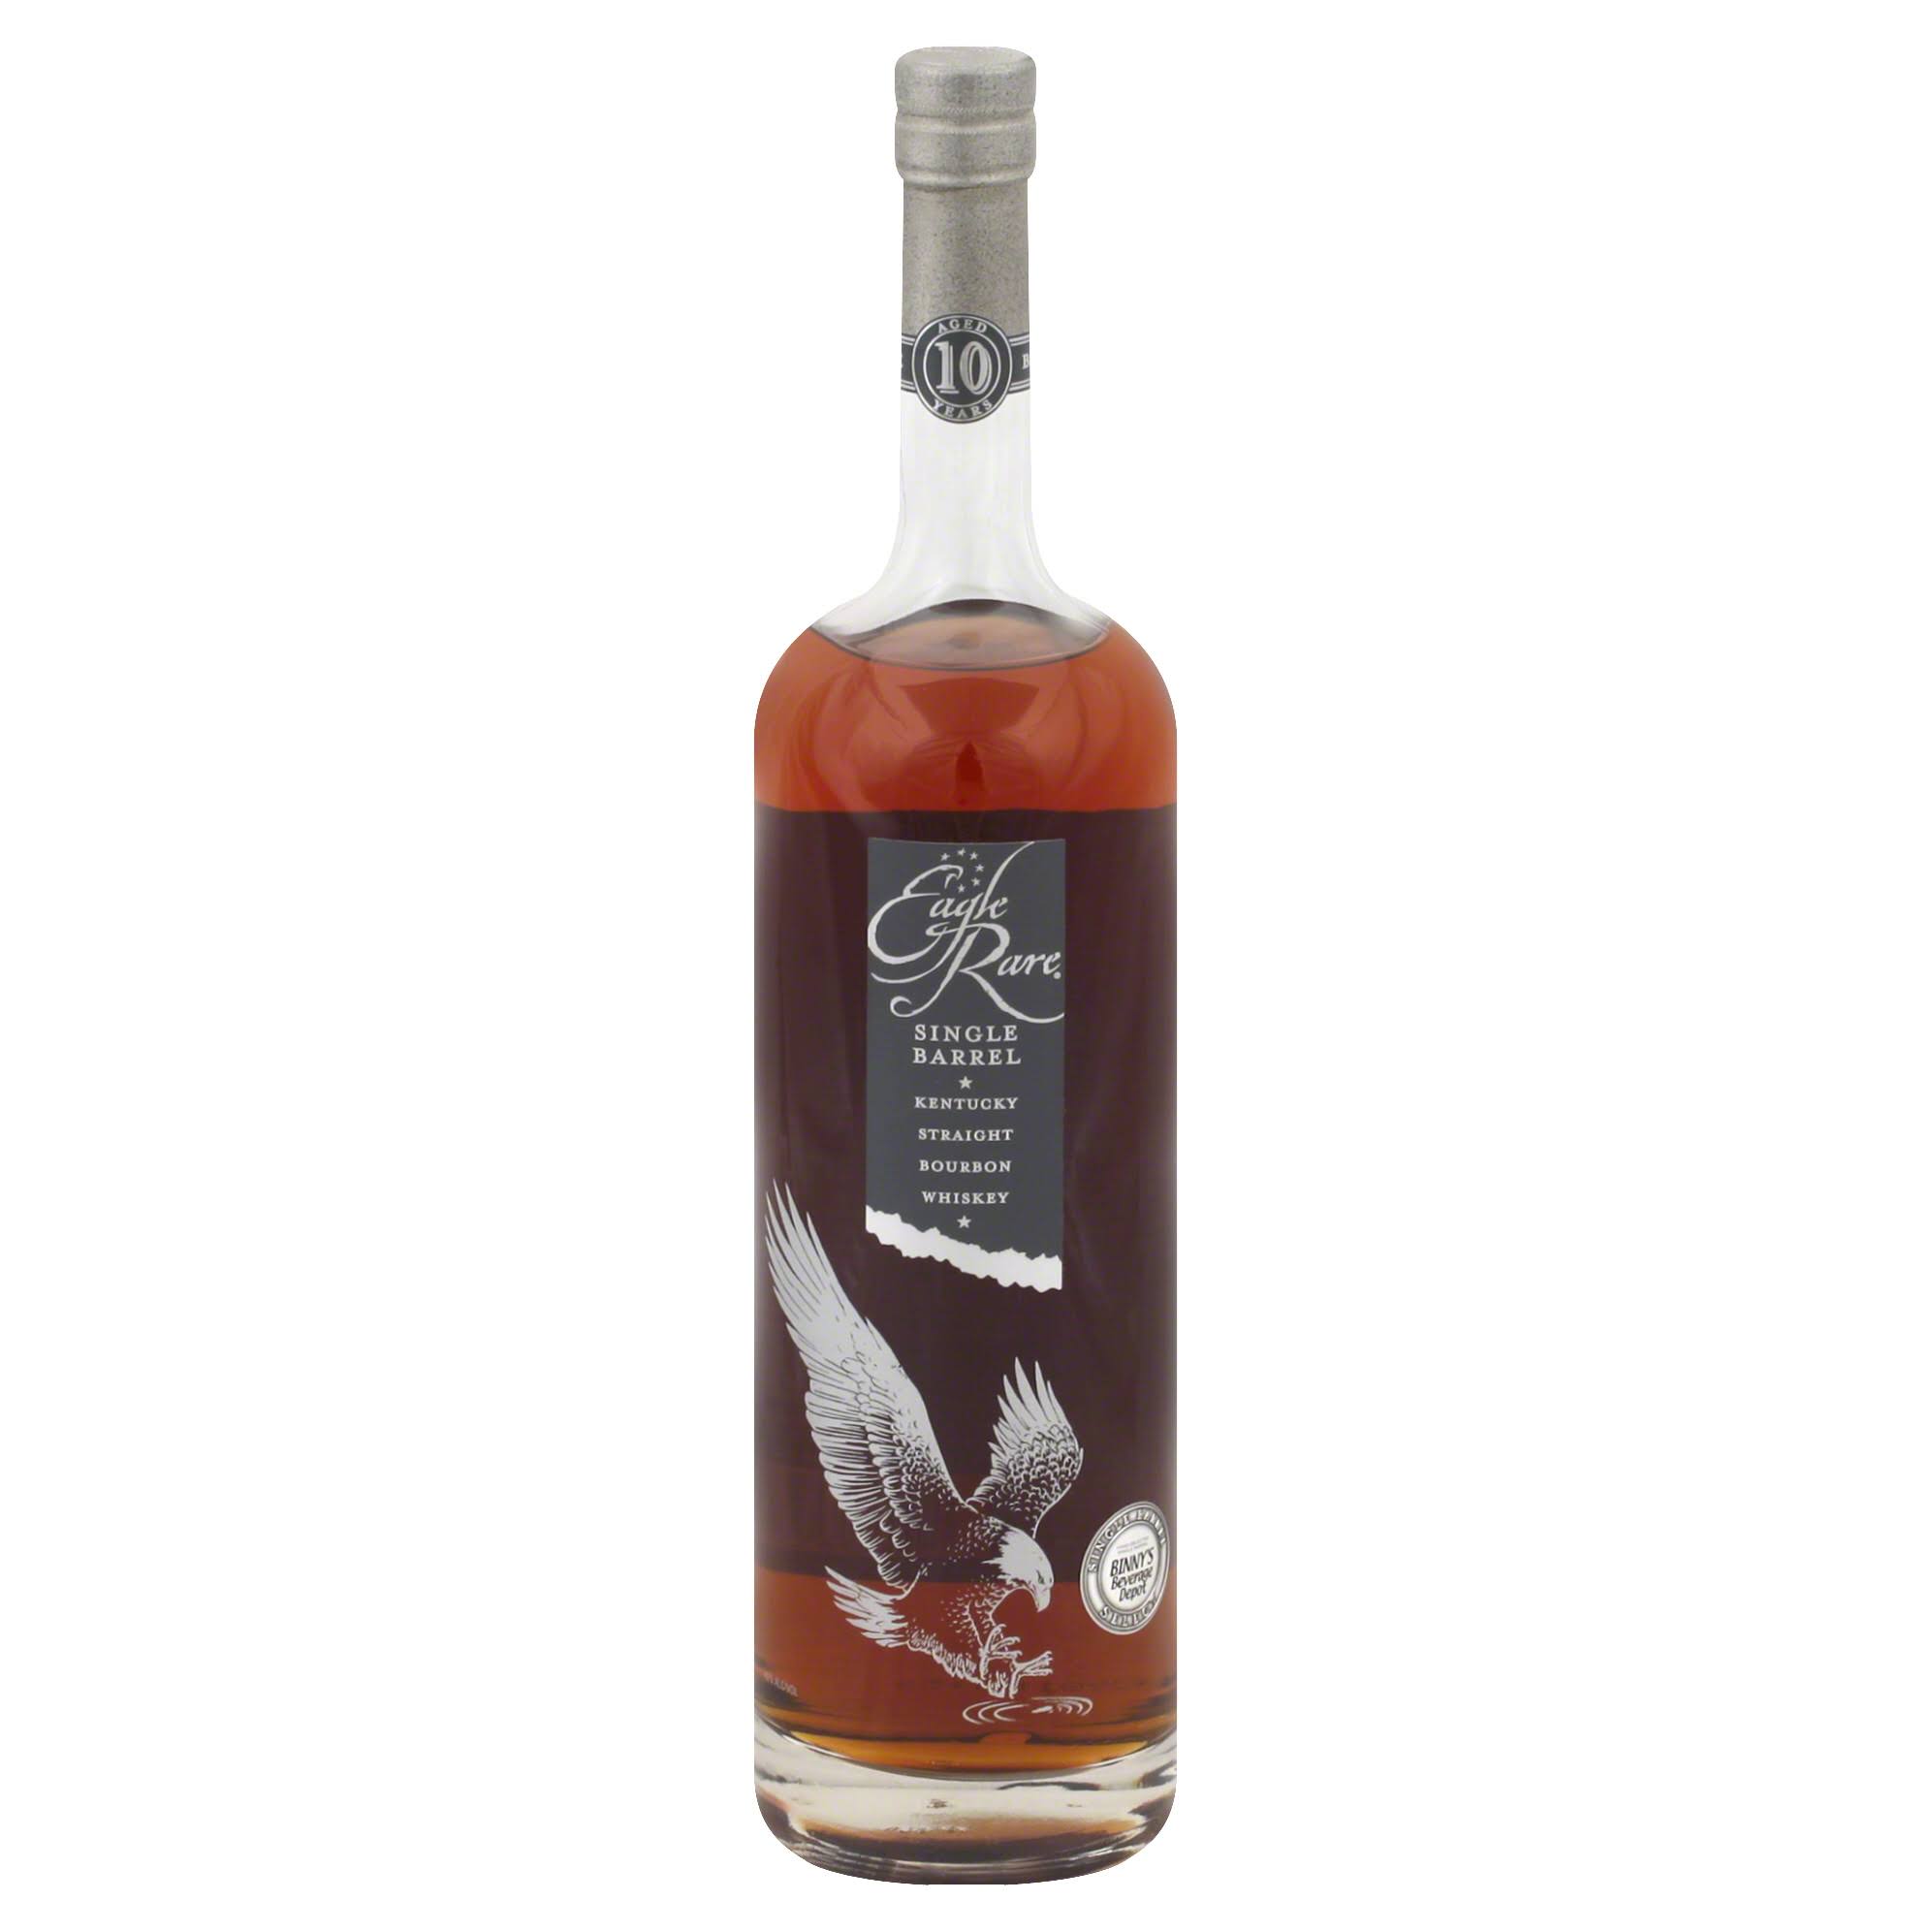 Eagle Rare Bourbon Whiskey - Kentucky Straight, Single Barrel